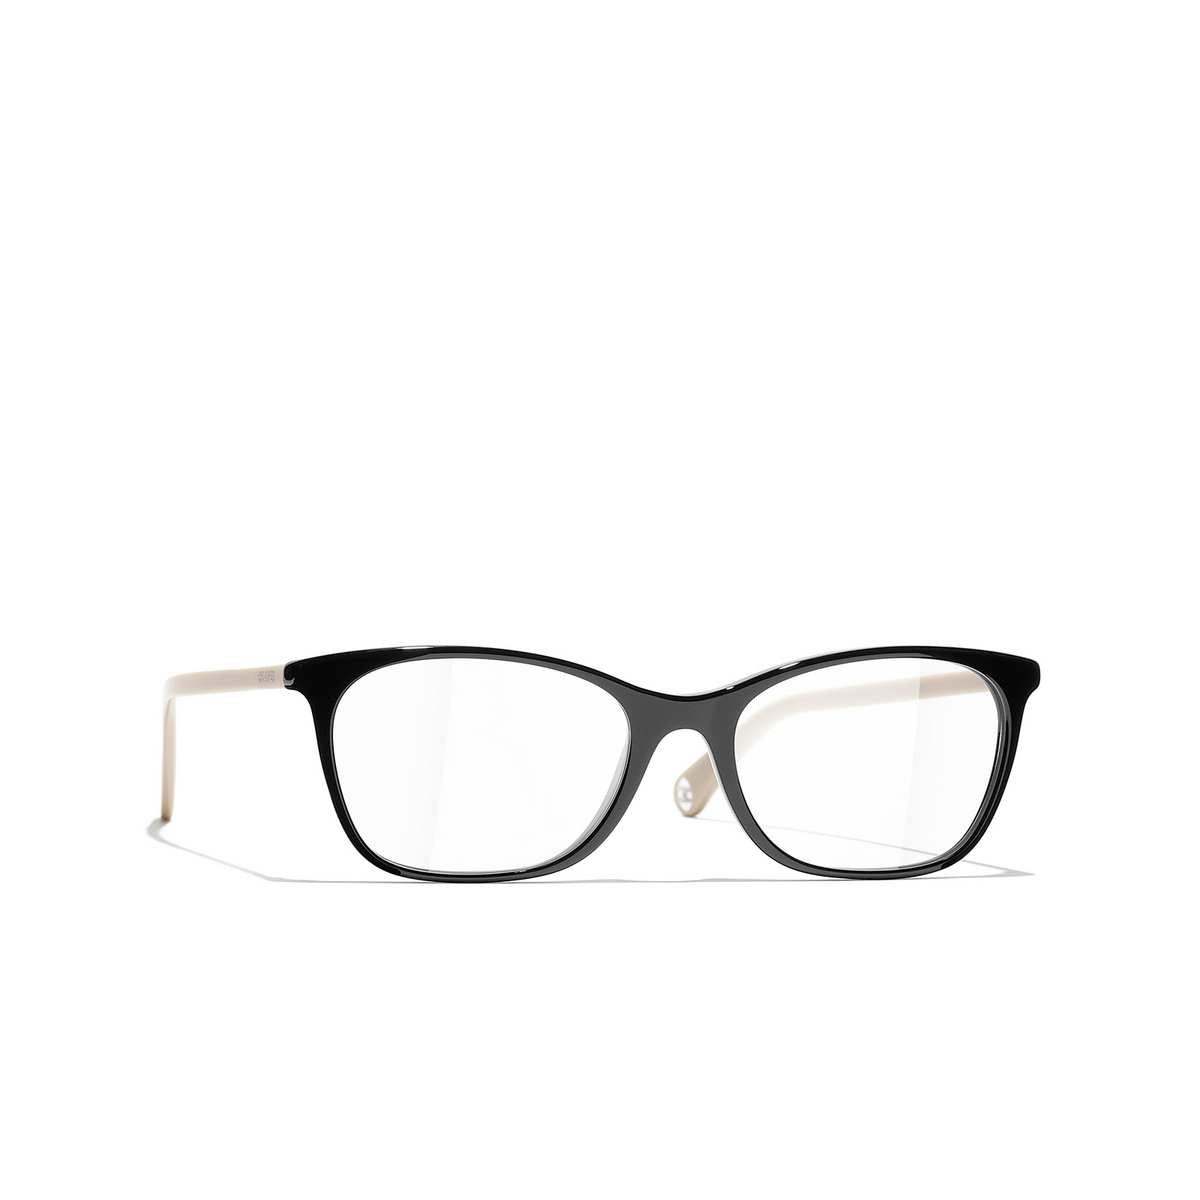 CHANEL rectangle Eyeglasses C942 Black & Beige - three-quarters view